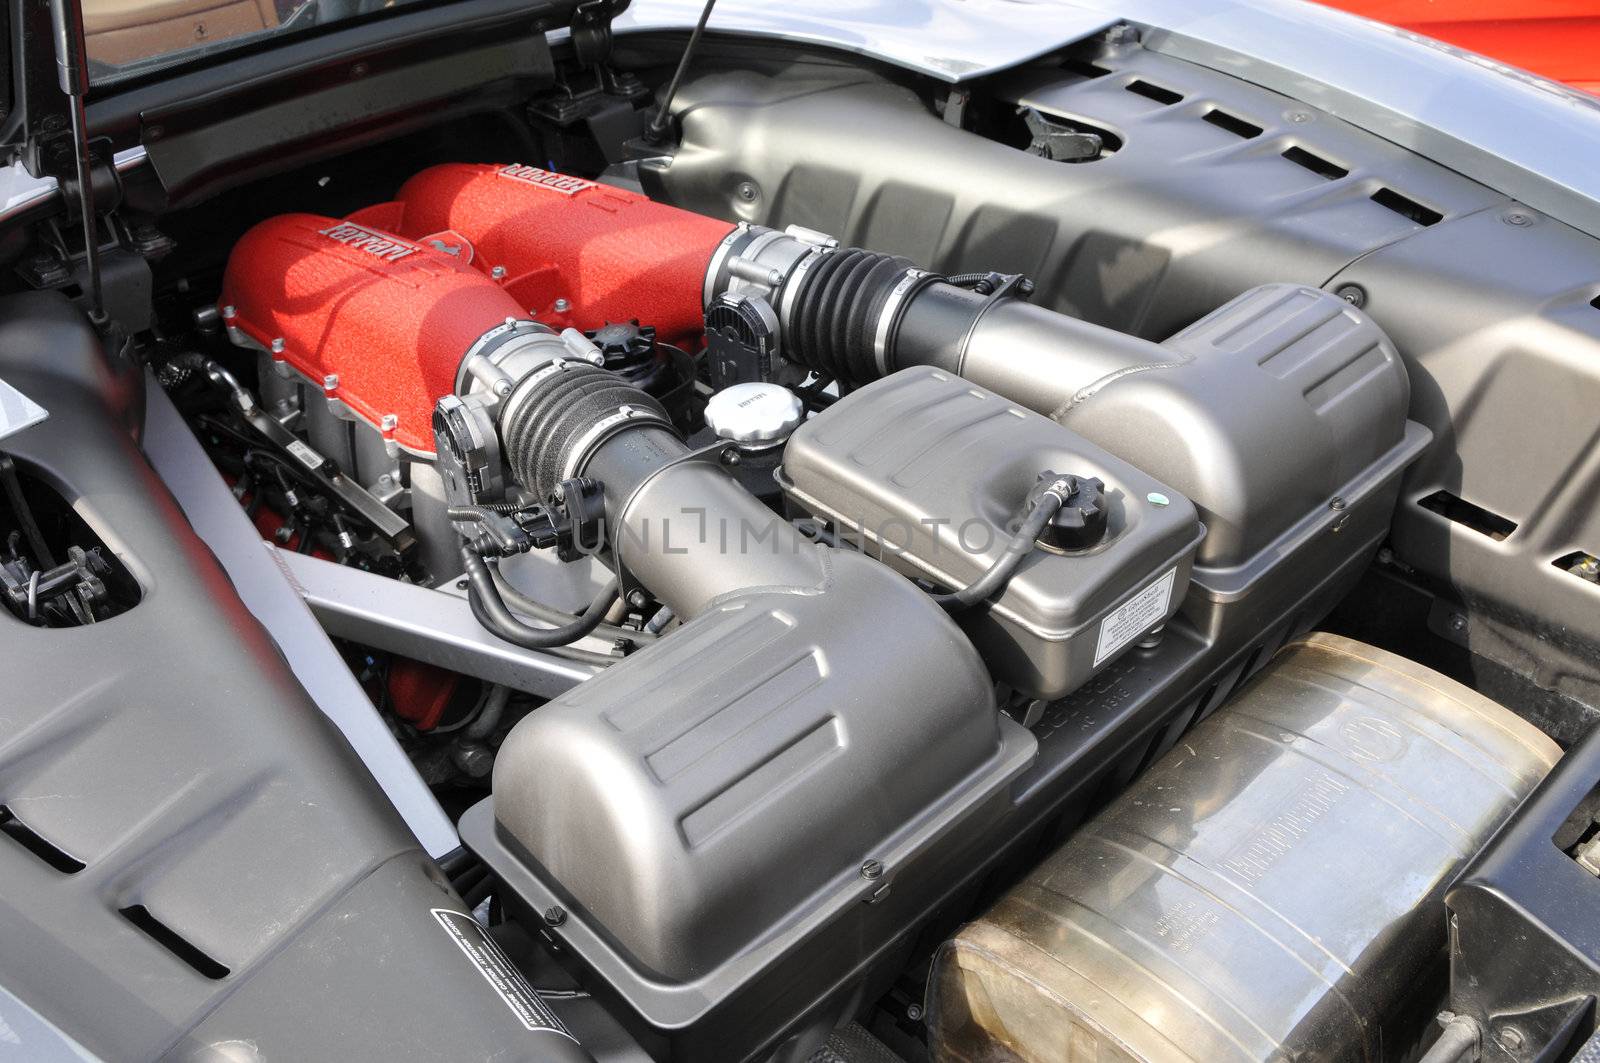 Close-up of a Ferrari motor by shkyo30